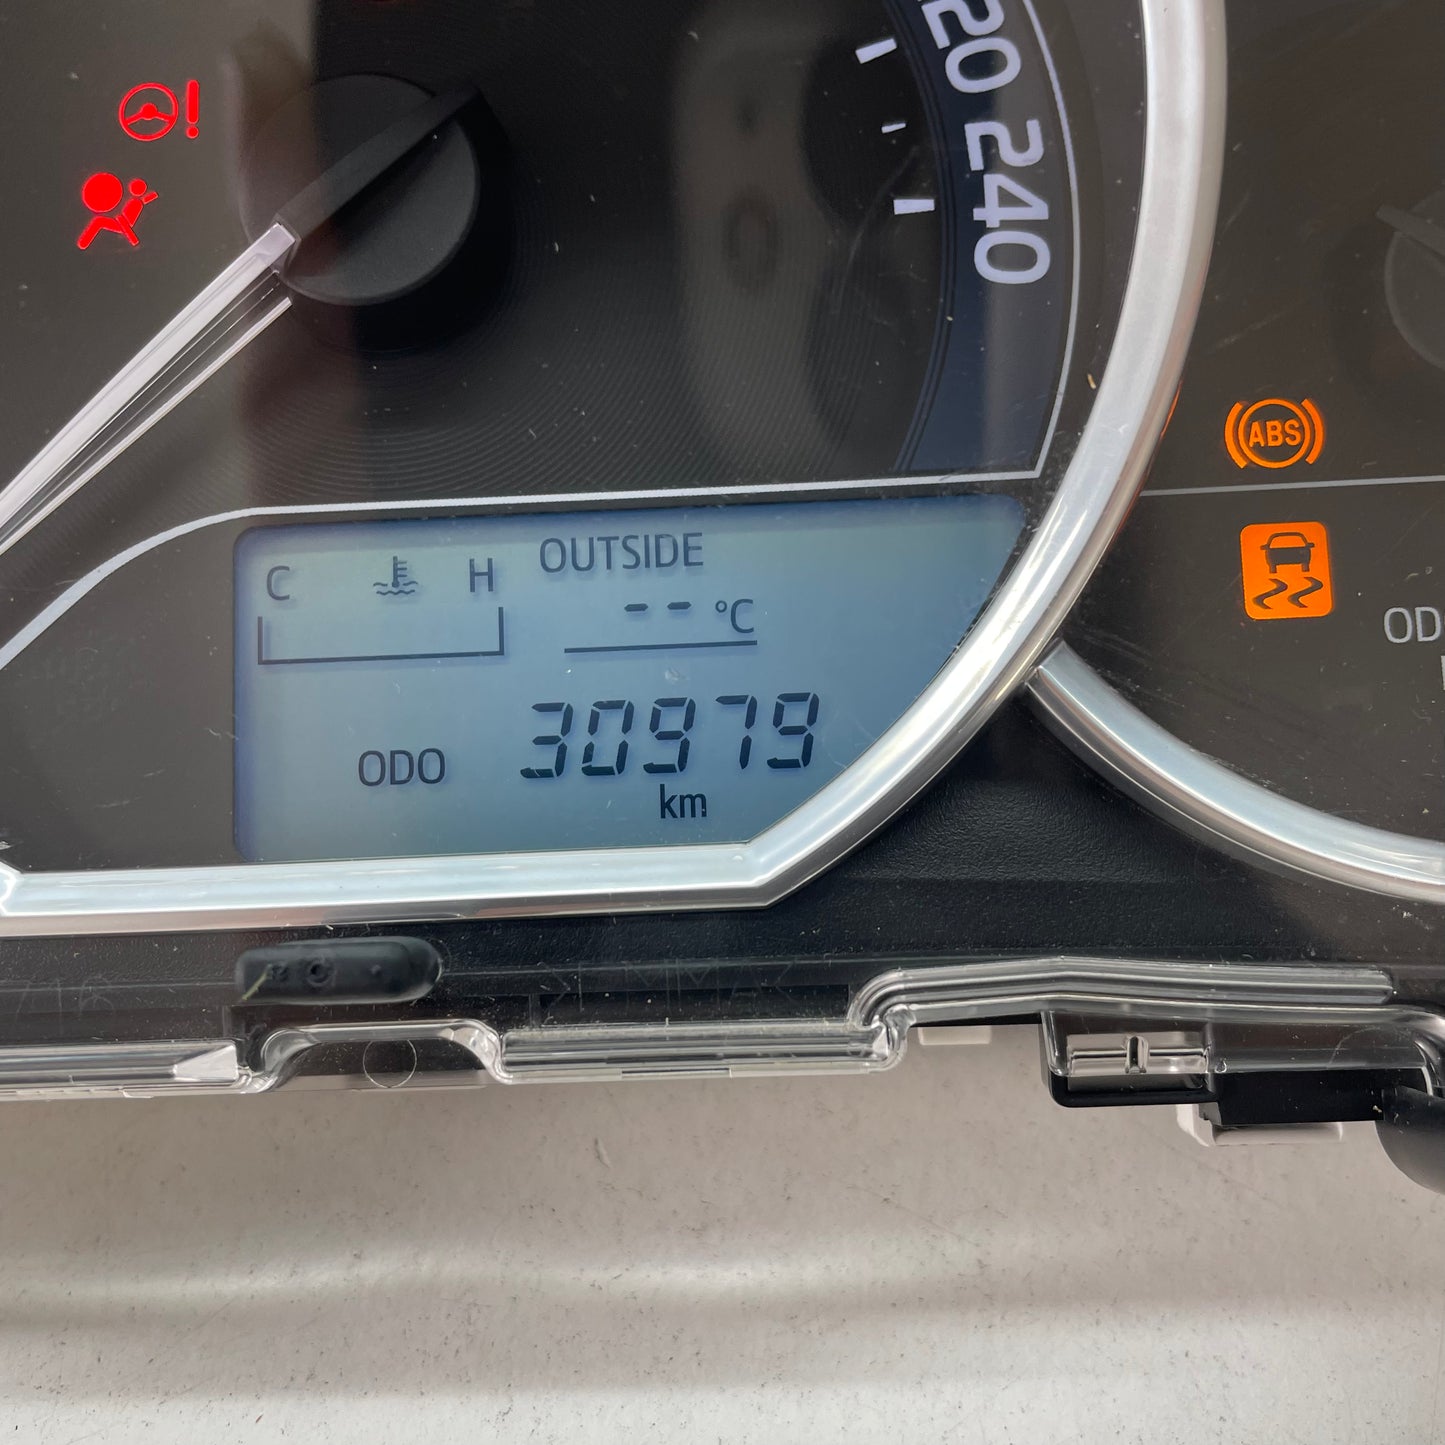 Toyota Corolla Hatchback Instrument Cluster ZRE182R 2015 2016 2017 2018 30979km